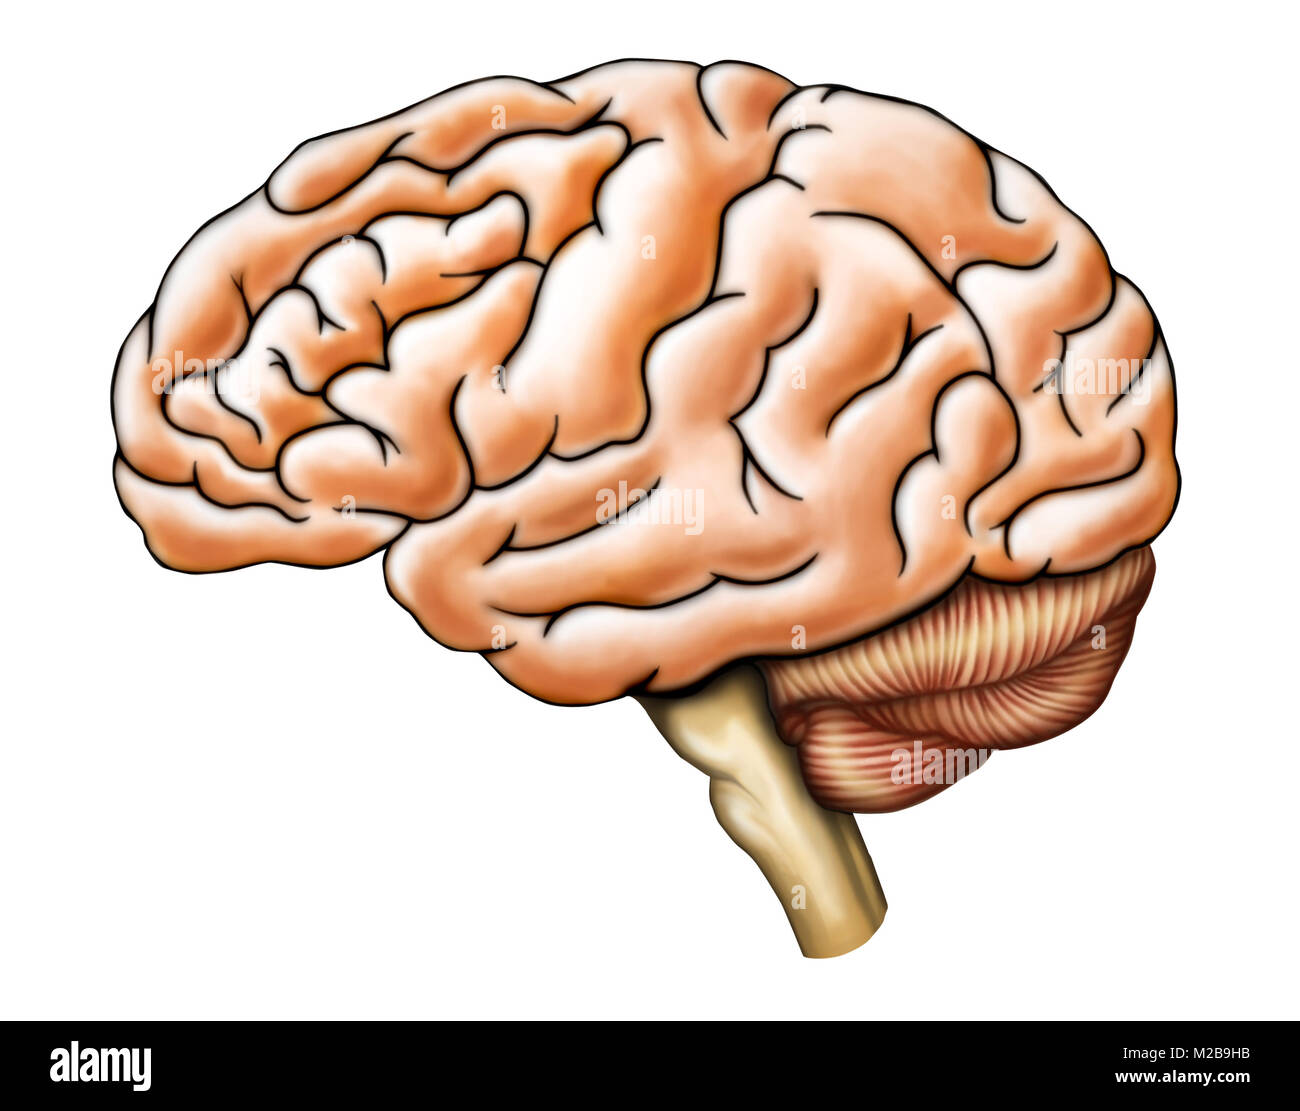 Human brain anatomy, side view. Digital illustration. Stock Photo